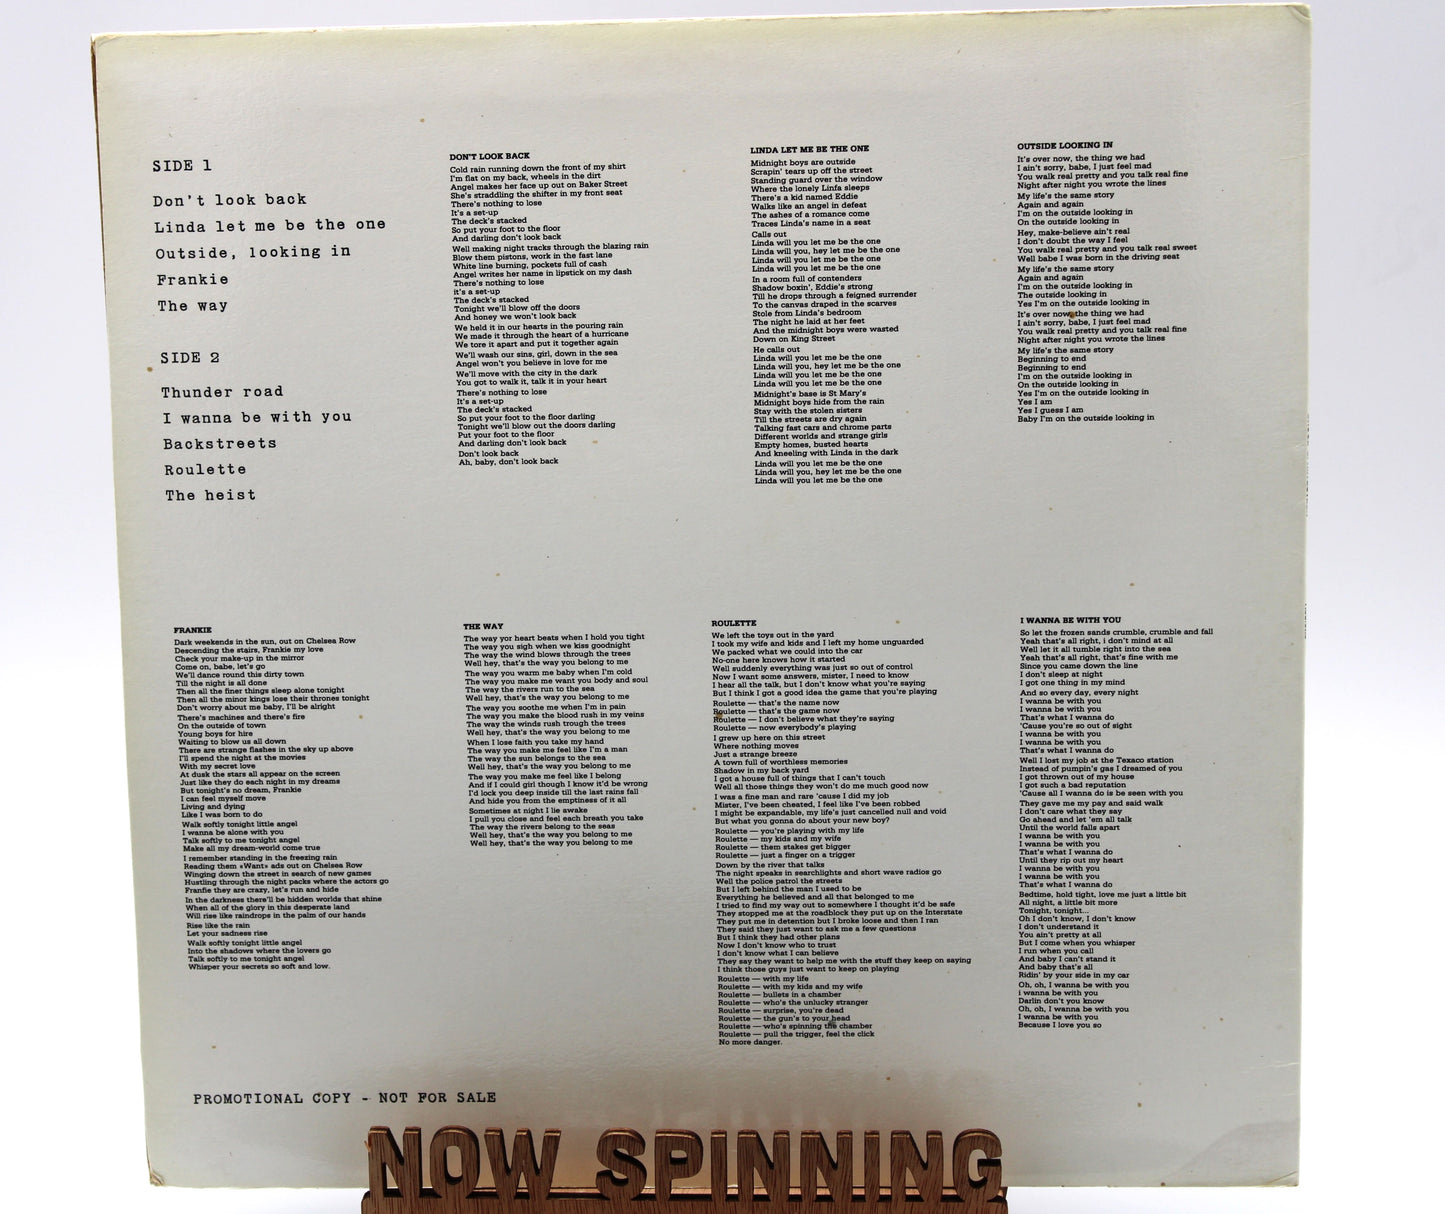 BRUCE SPRINGSTEEN - ROULETTE - UNOFFICIAL VINYL LP PROMO 1975-1979